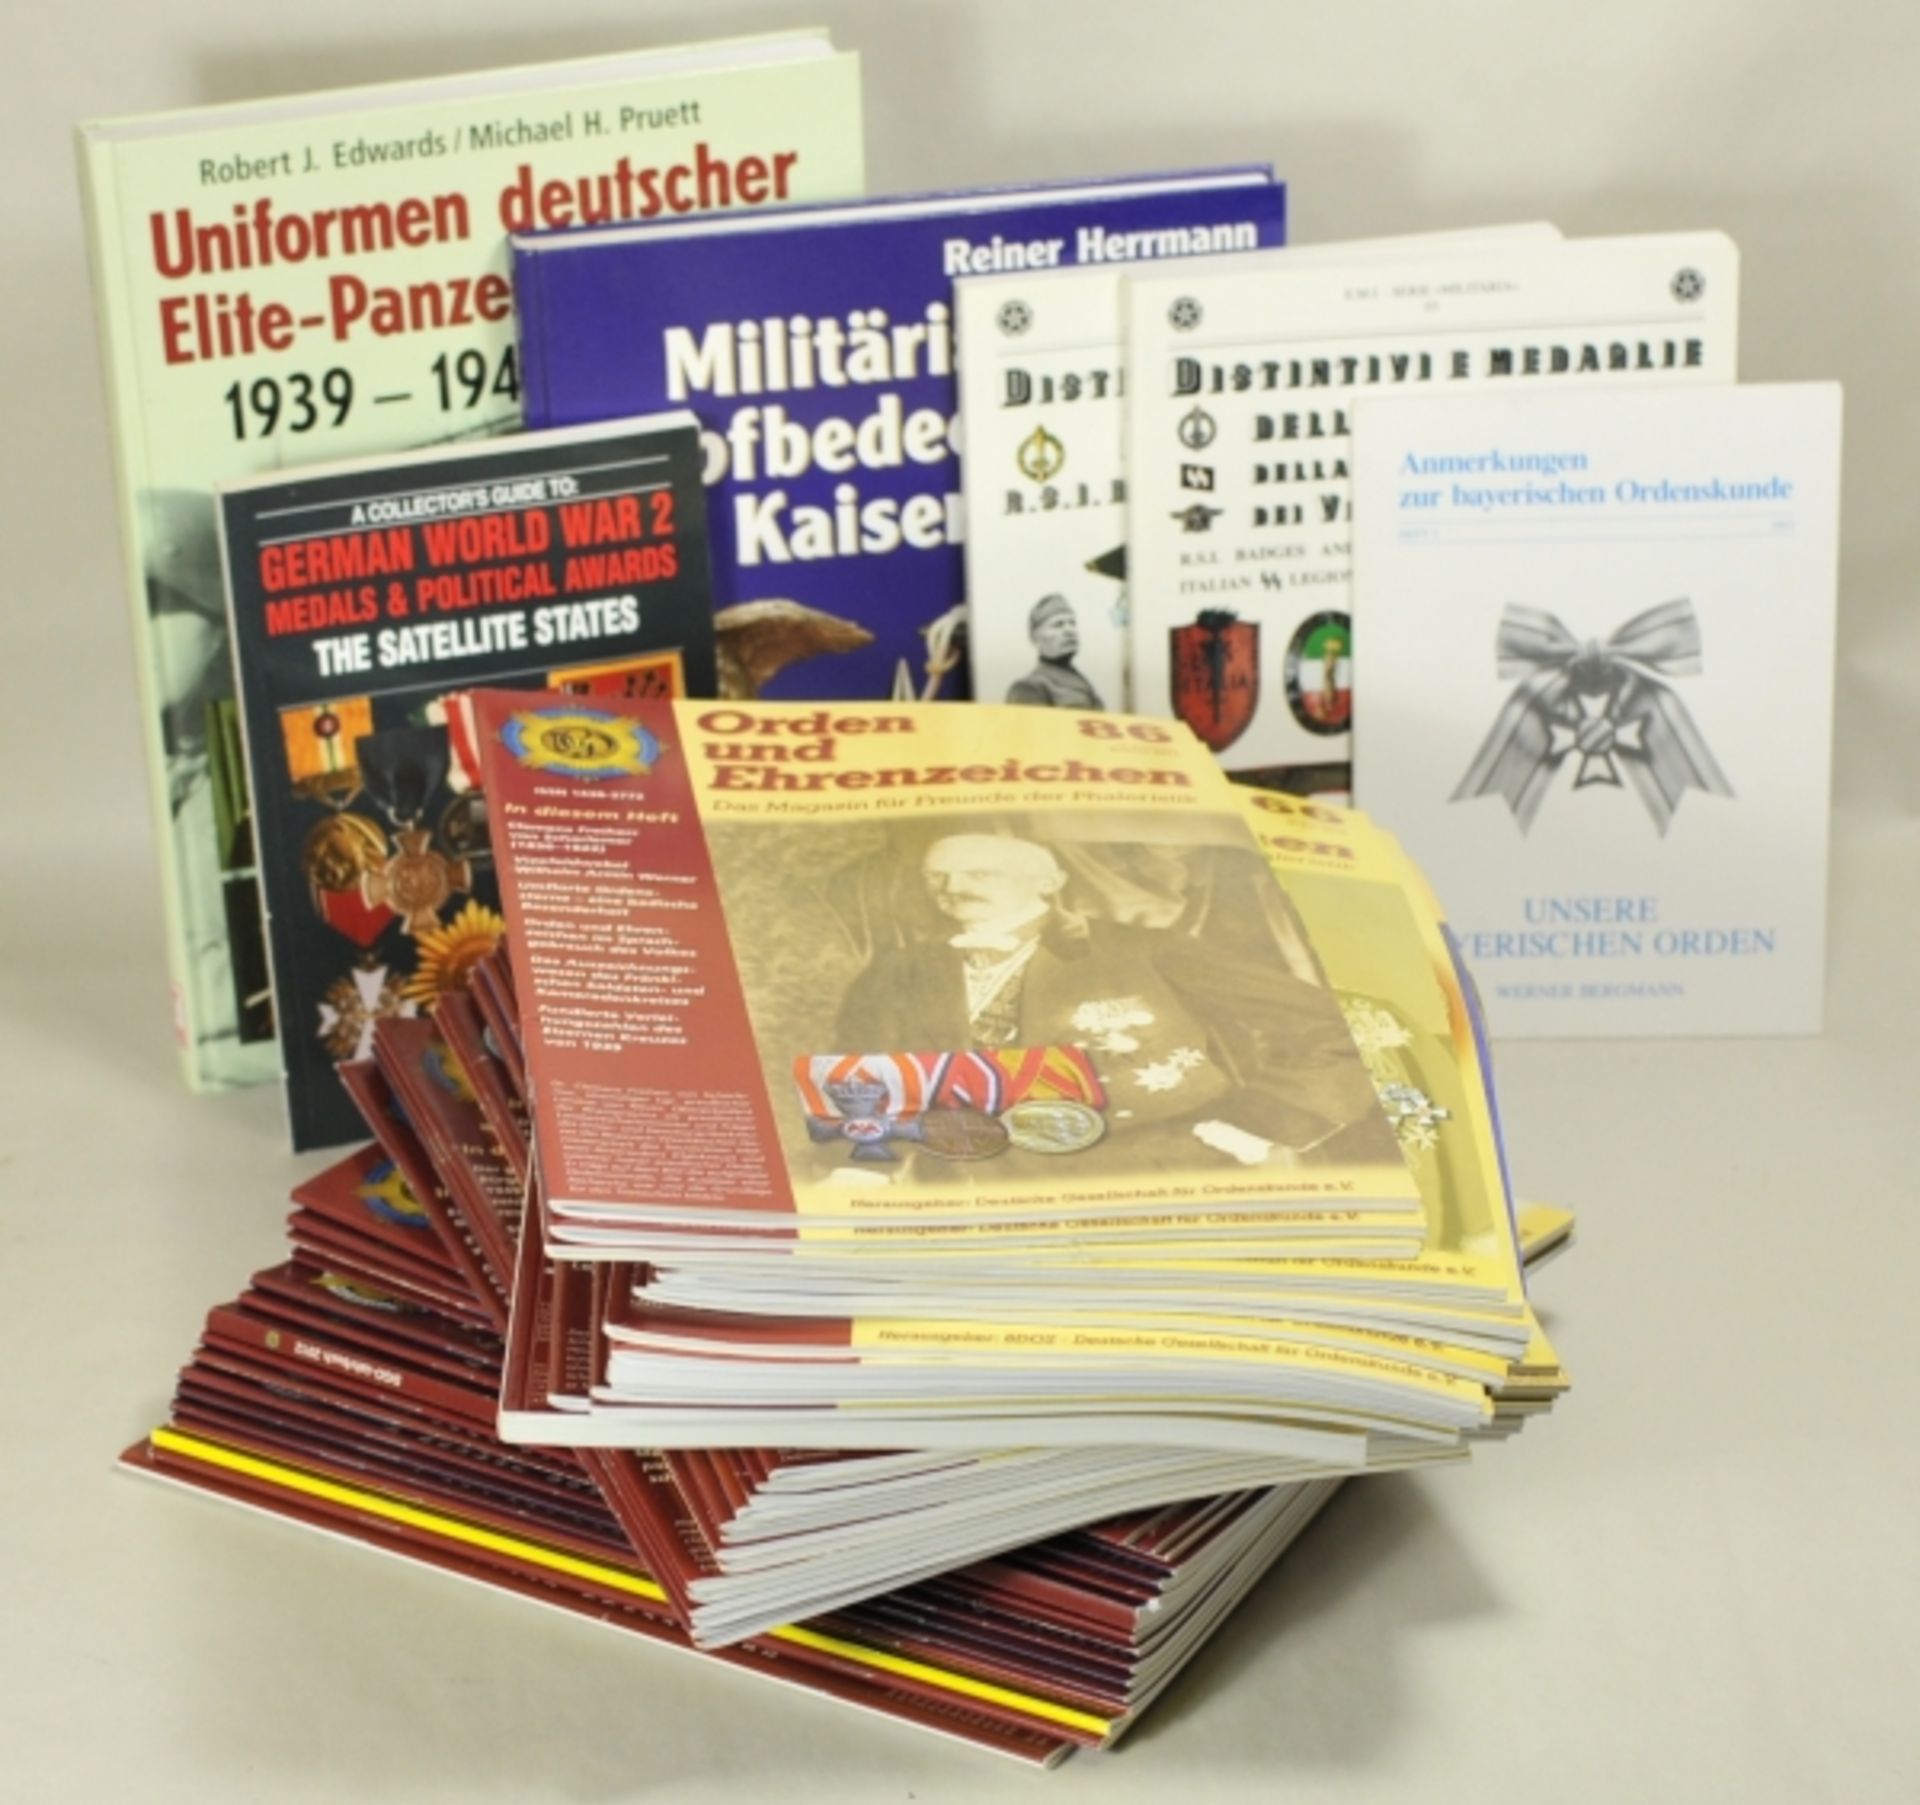 Ordenskunde und Militaria Literatur Lot.Diverse.Zustand: II

Order studies and military literature